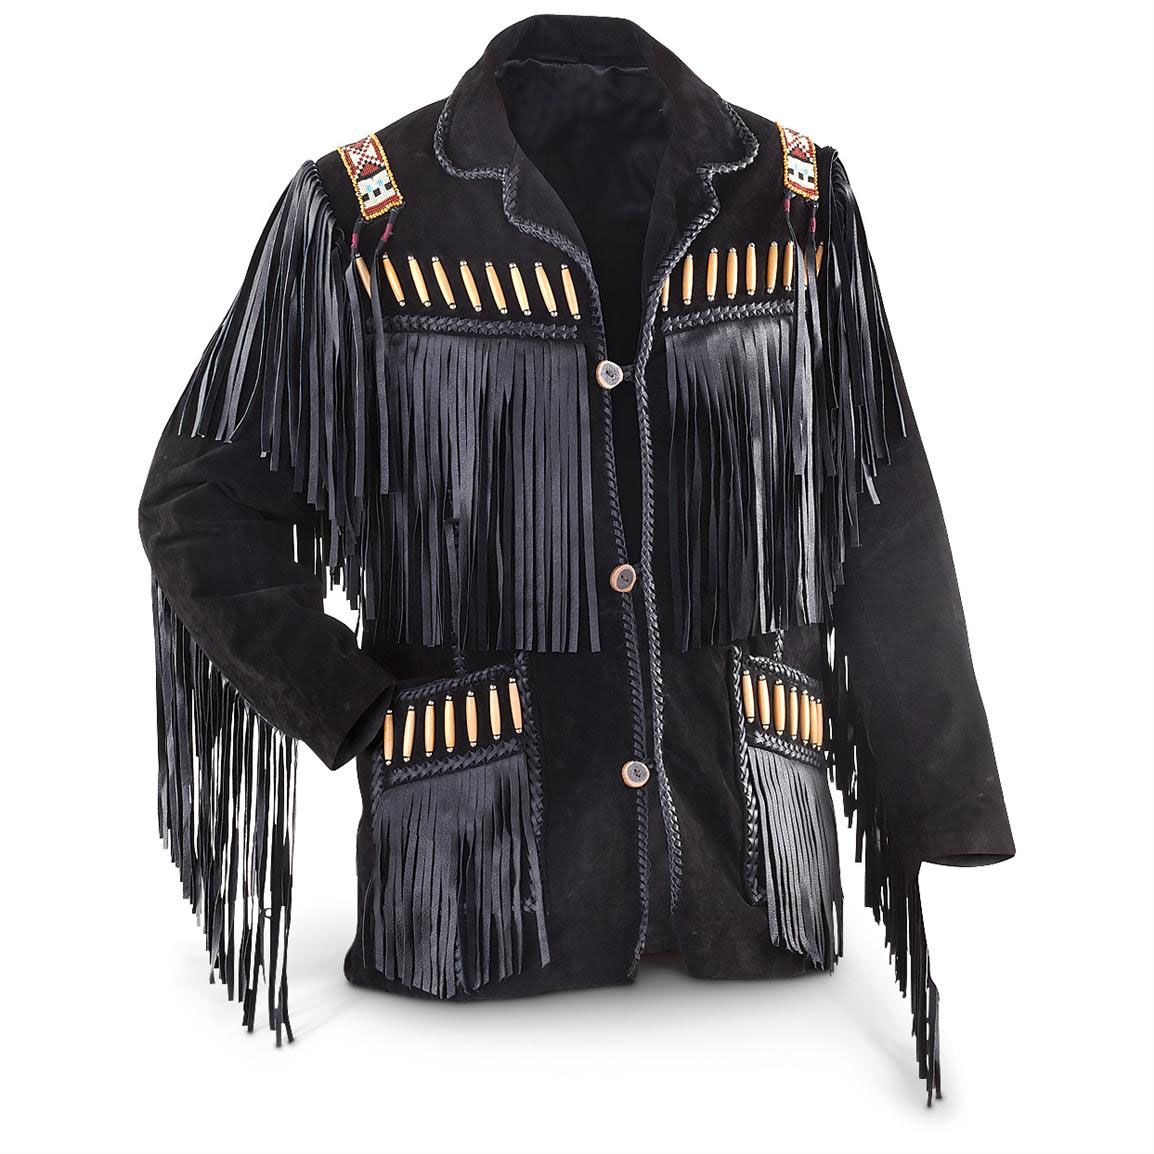 Men's Native American Buckskin Black Suede Leather Western Fringes Beaded Jacket Fj13